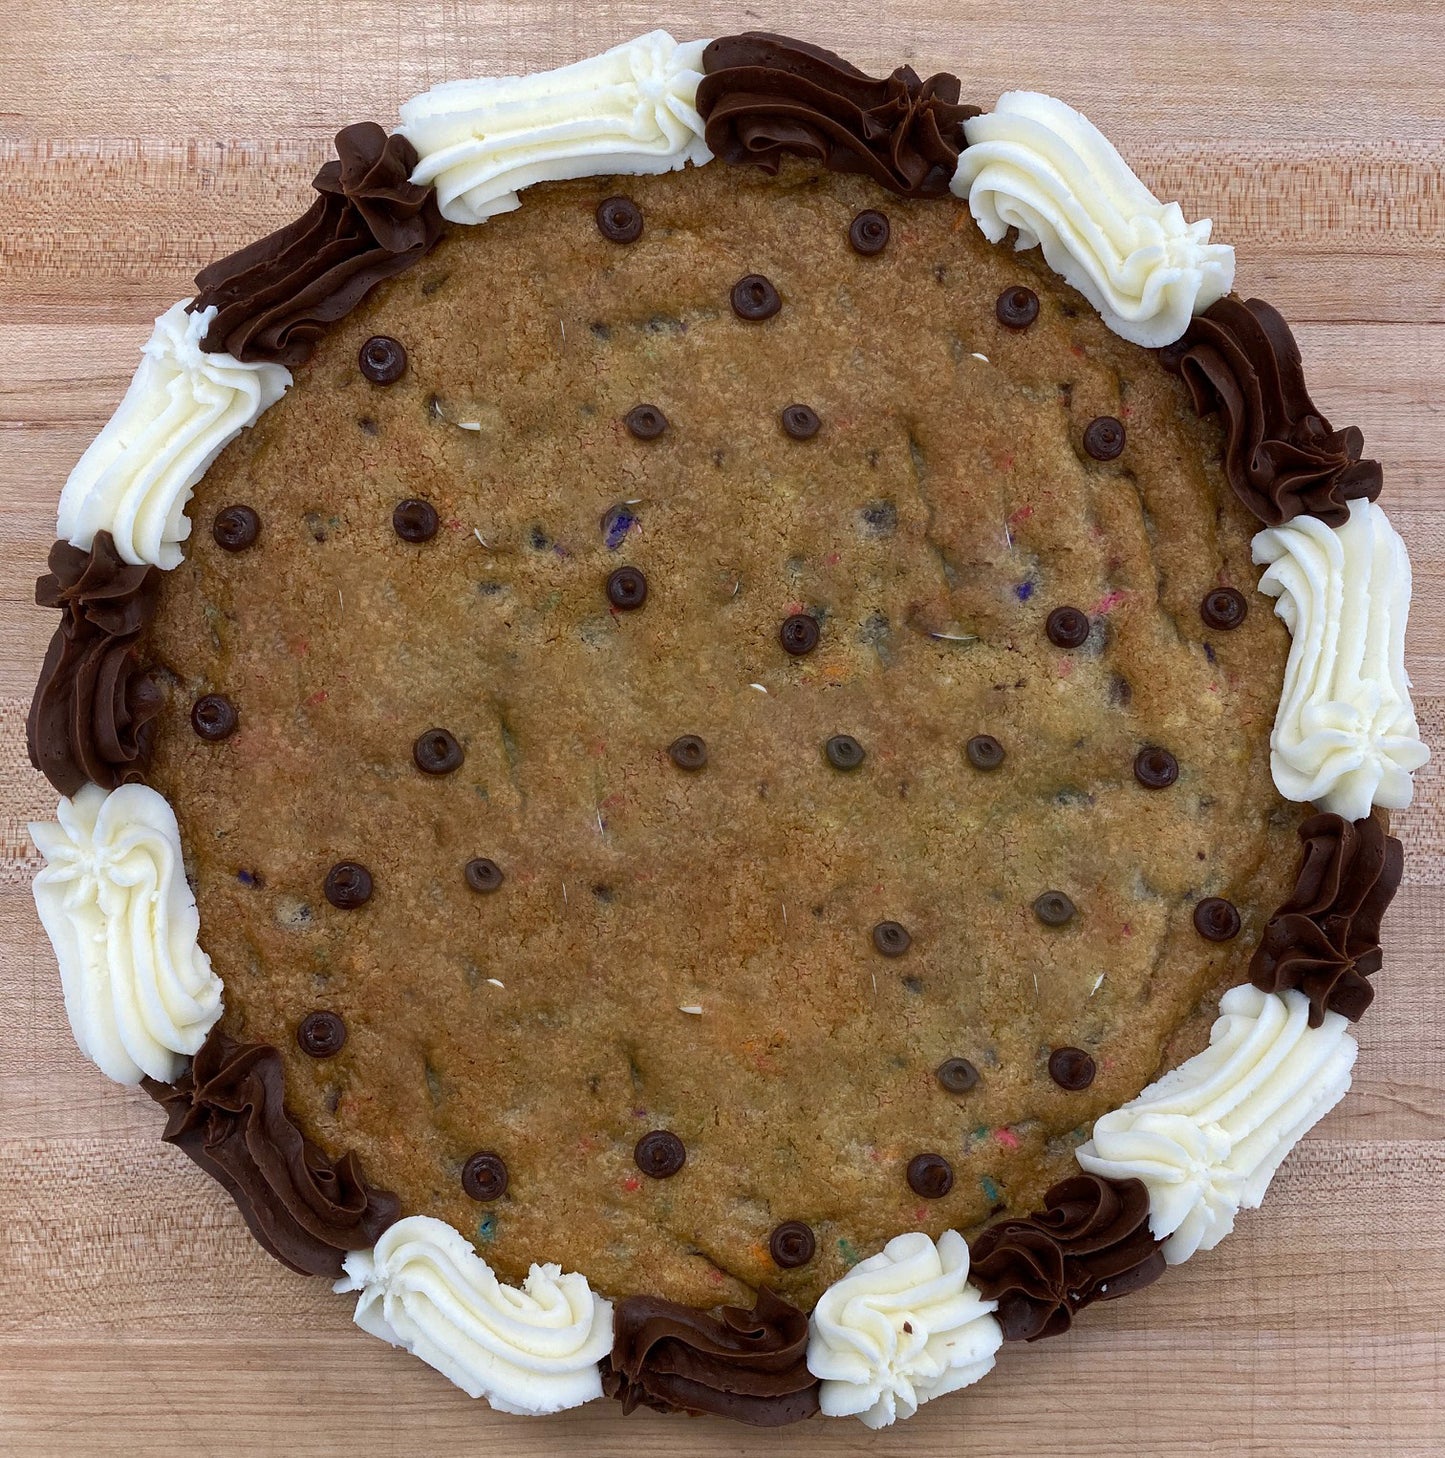 Cookie Cake: 12" Round